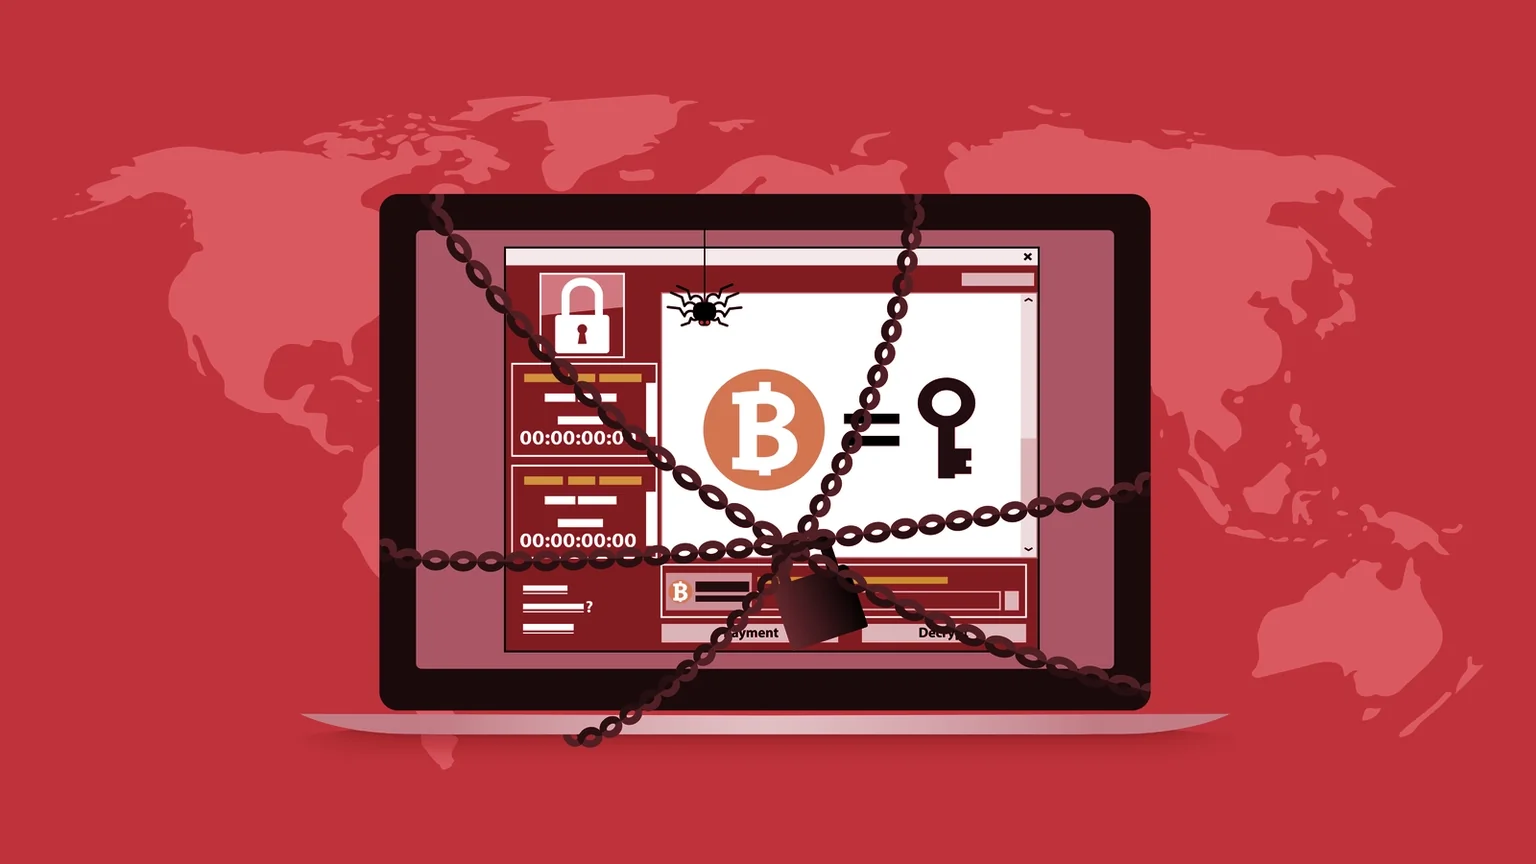 Hackers demanding Bitcoin as ransom. Image: Shutterstock 